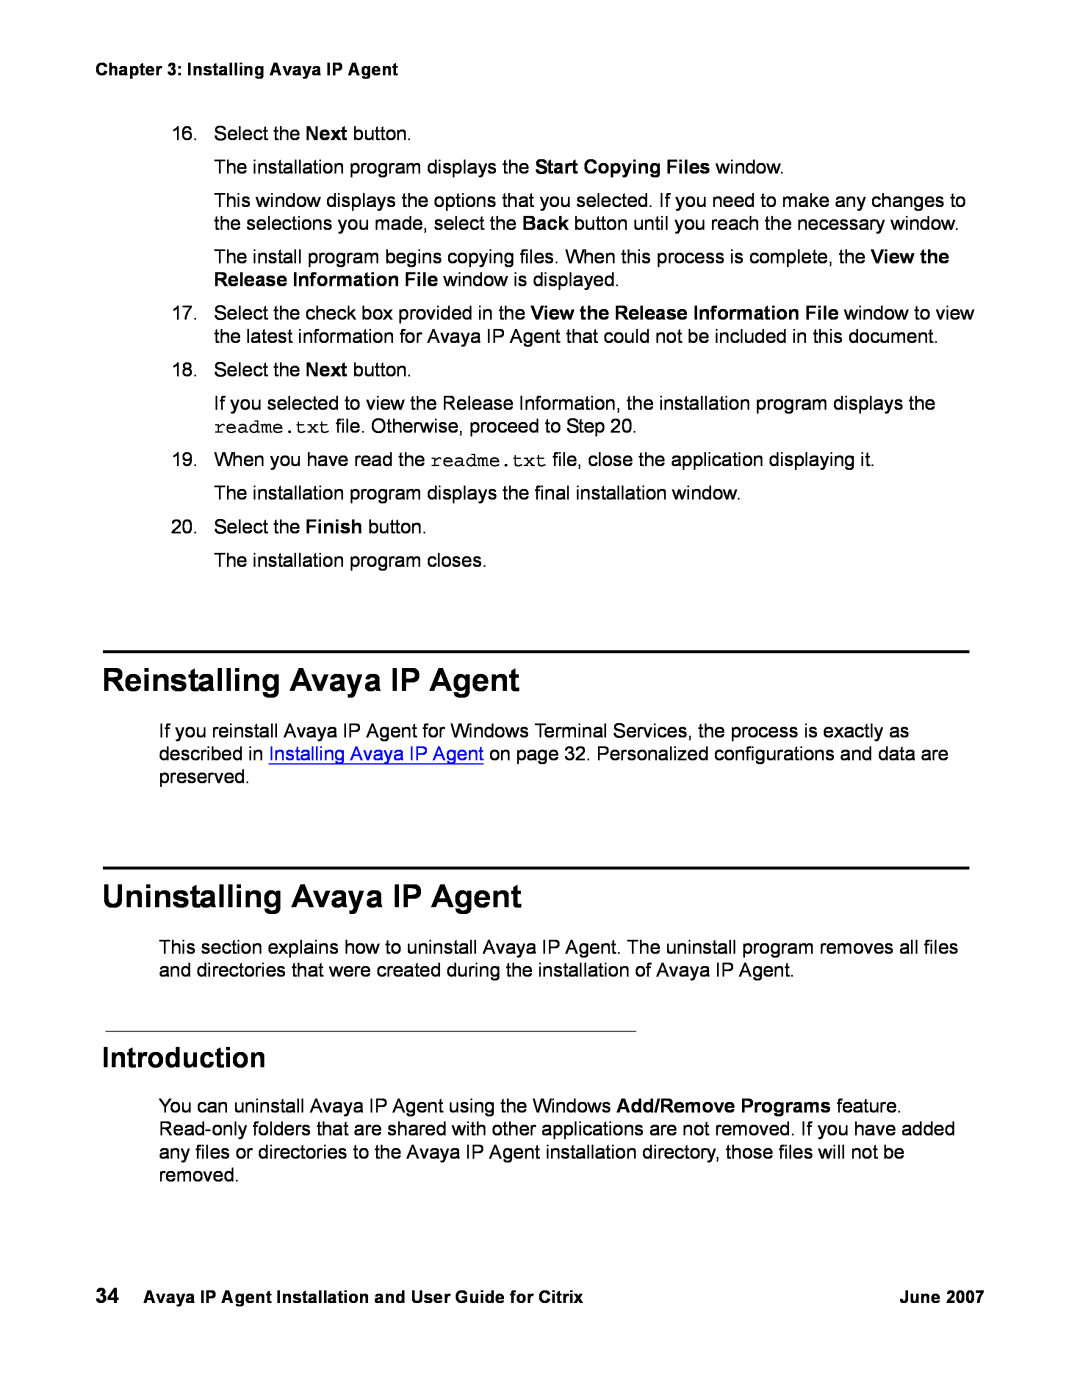 Avaya 7 manual Reinstalling Avaya IP Agent, Uninstalling Avaya IP Agent, Introduction 